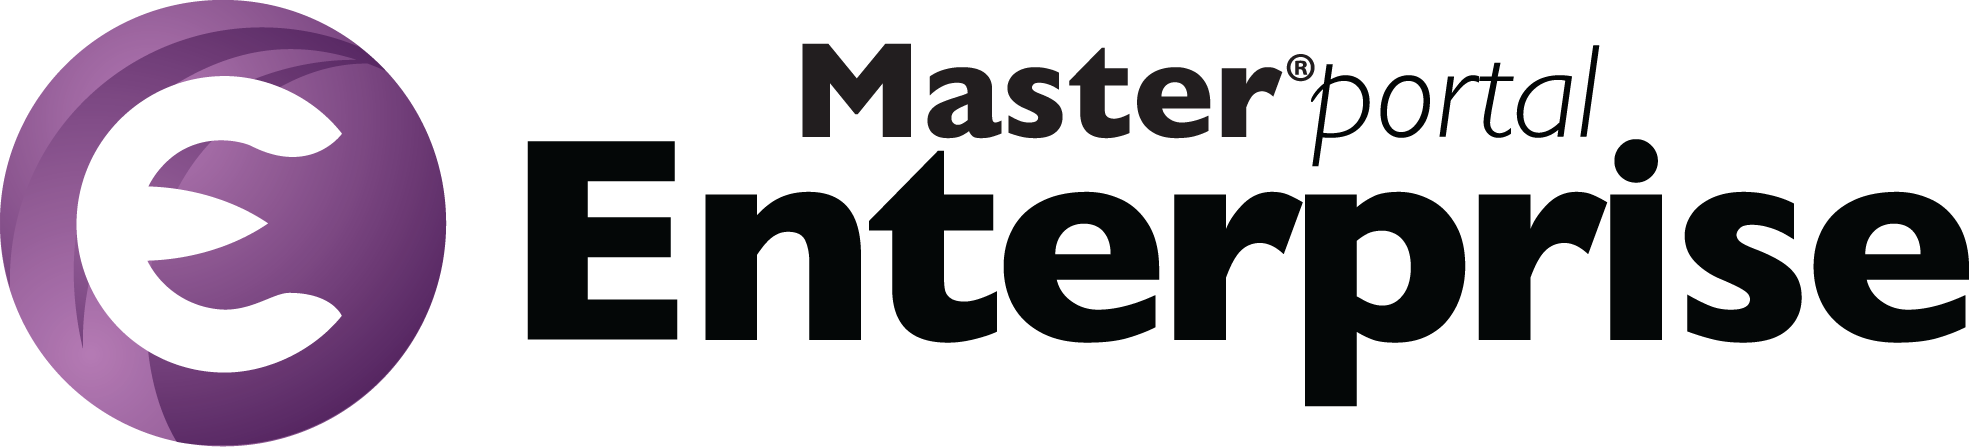 Master portal Enterprise